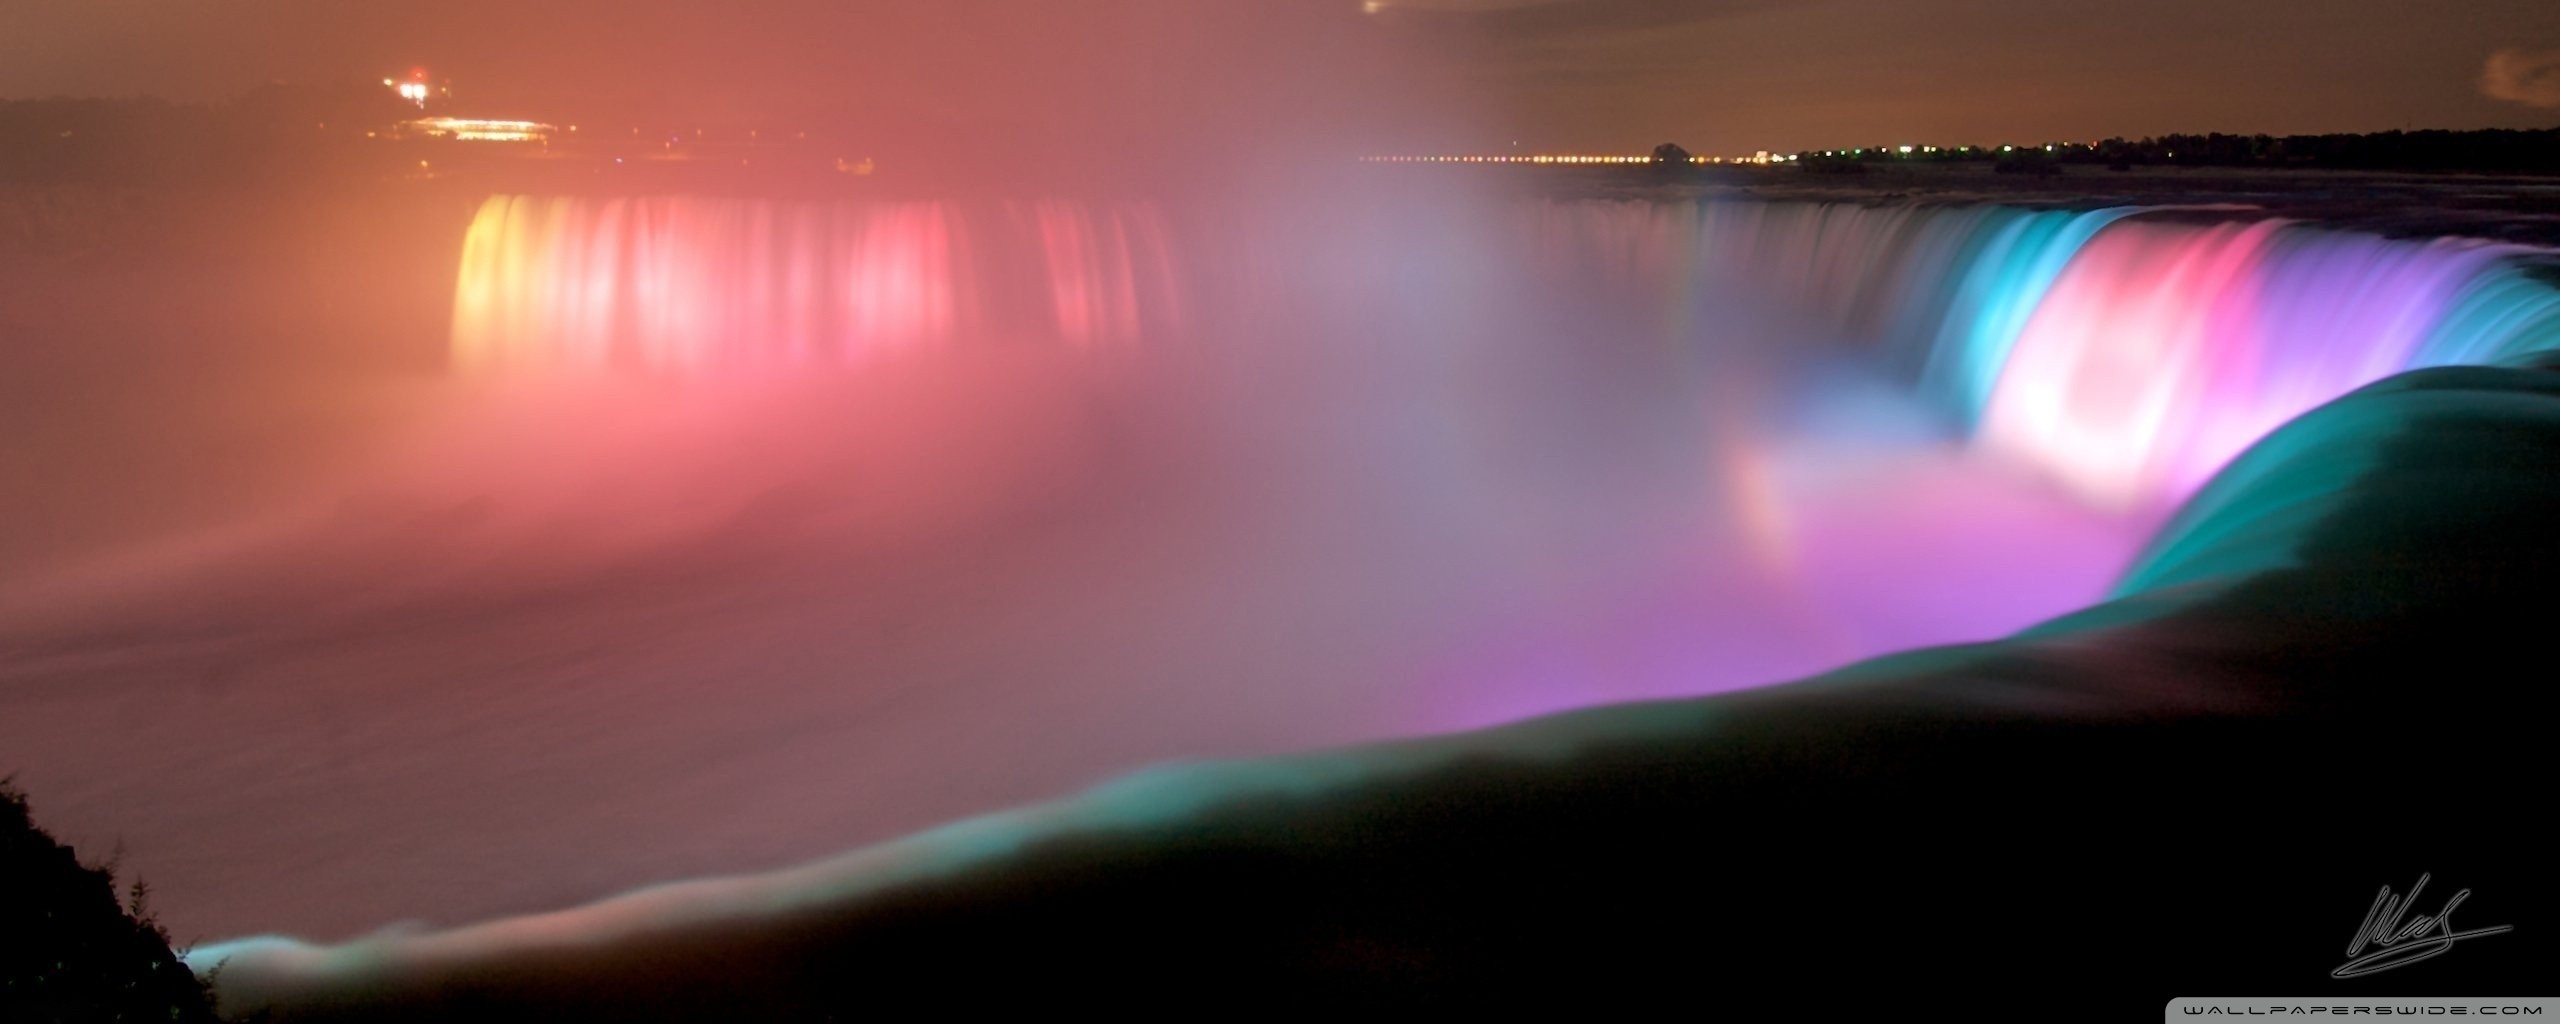 Niagara Falls At Night Wallpaper - Niagara Falls At Night Wallpaper Hd - HD Wallpaper 